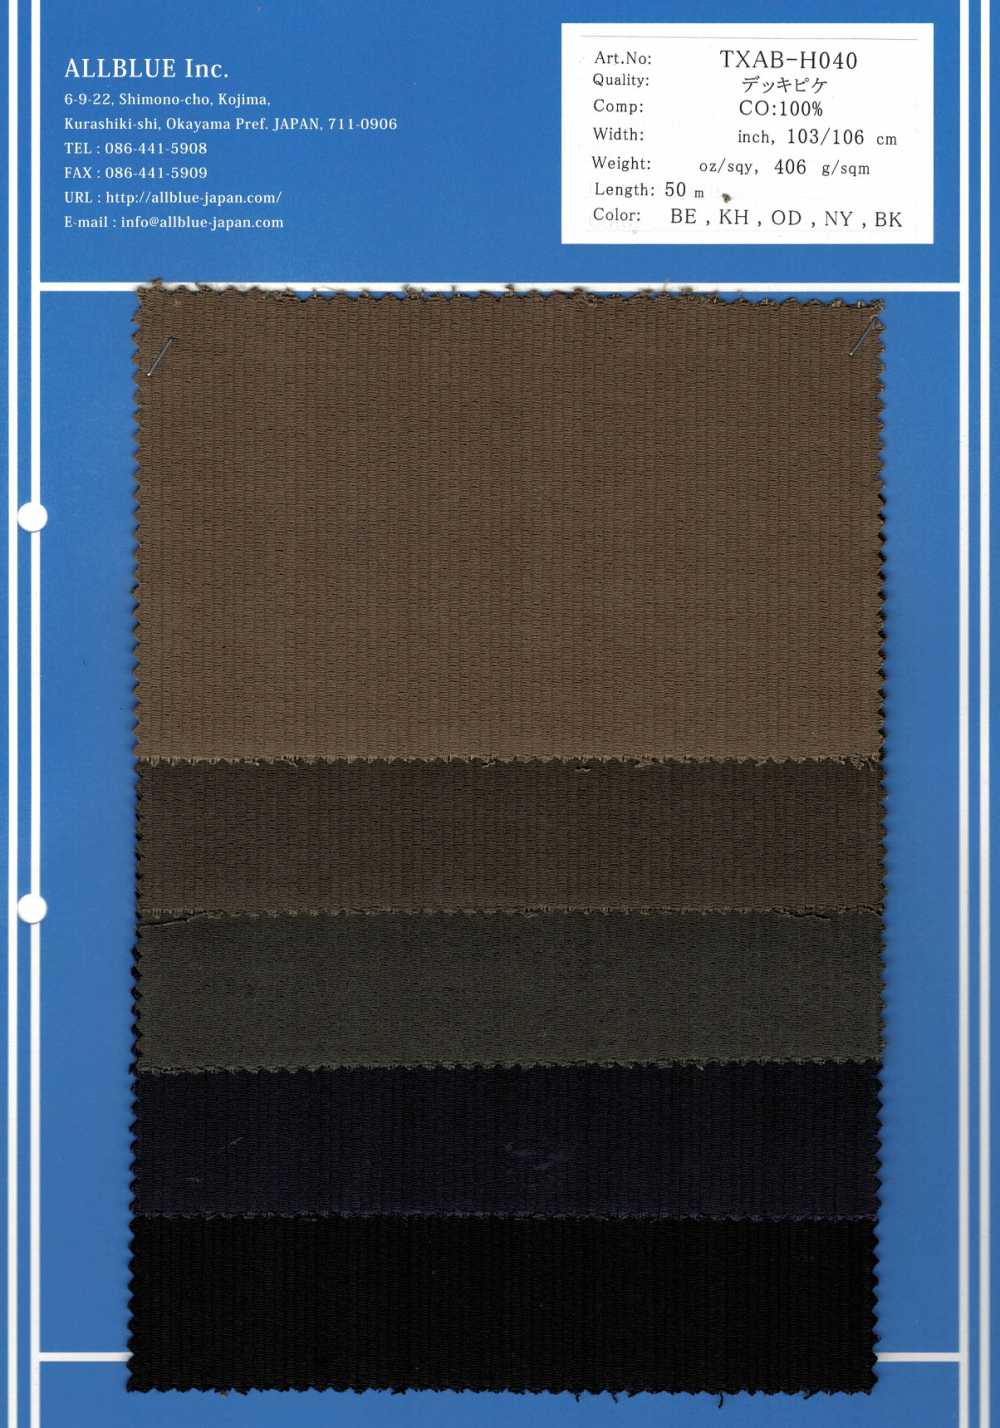 TXAB-H040 Deck Picket[Textile / Fabric]